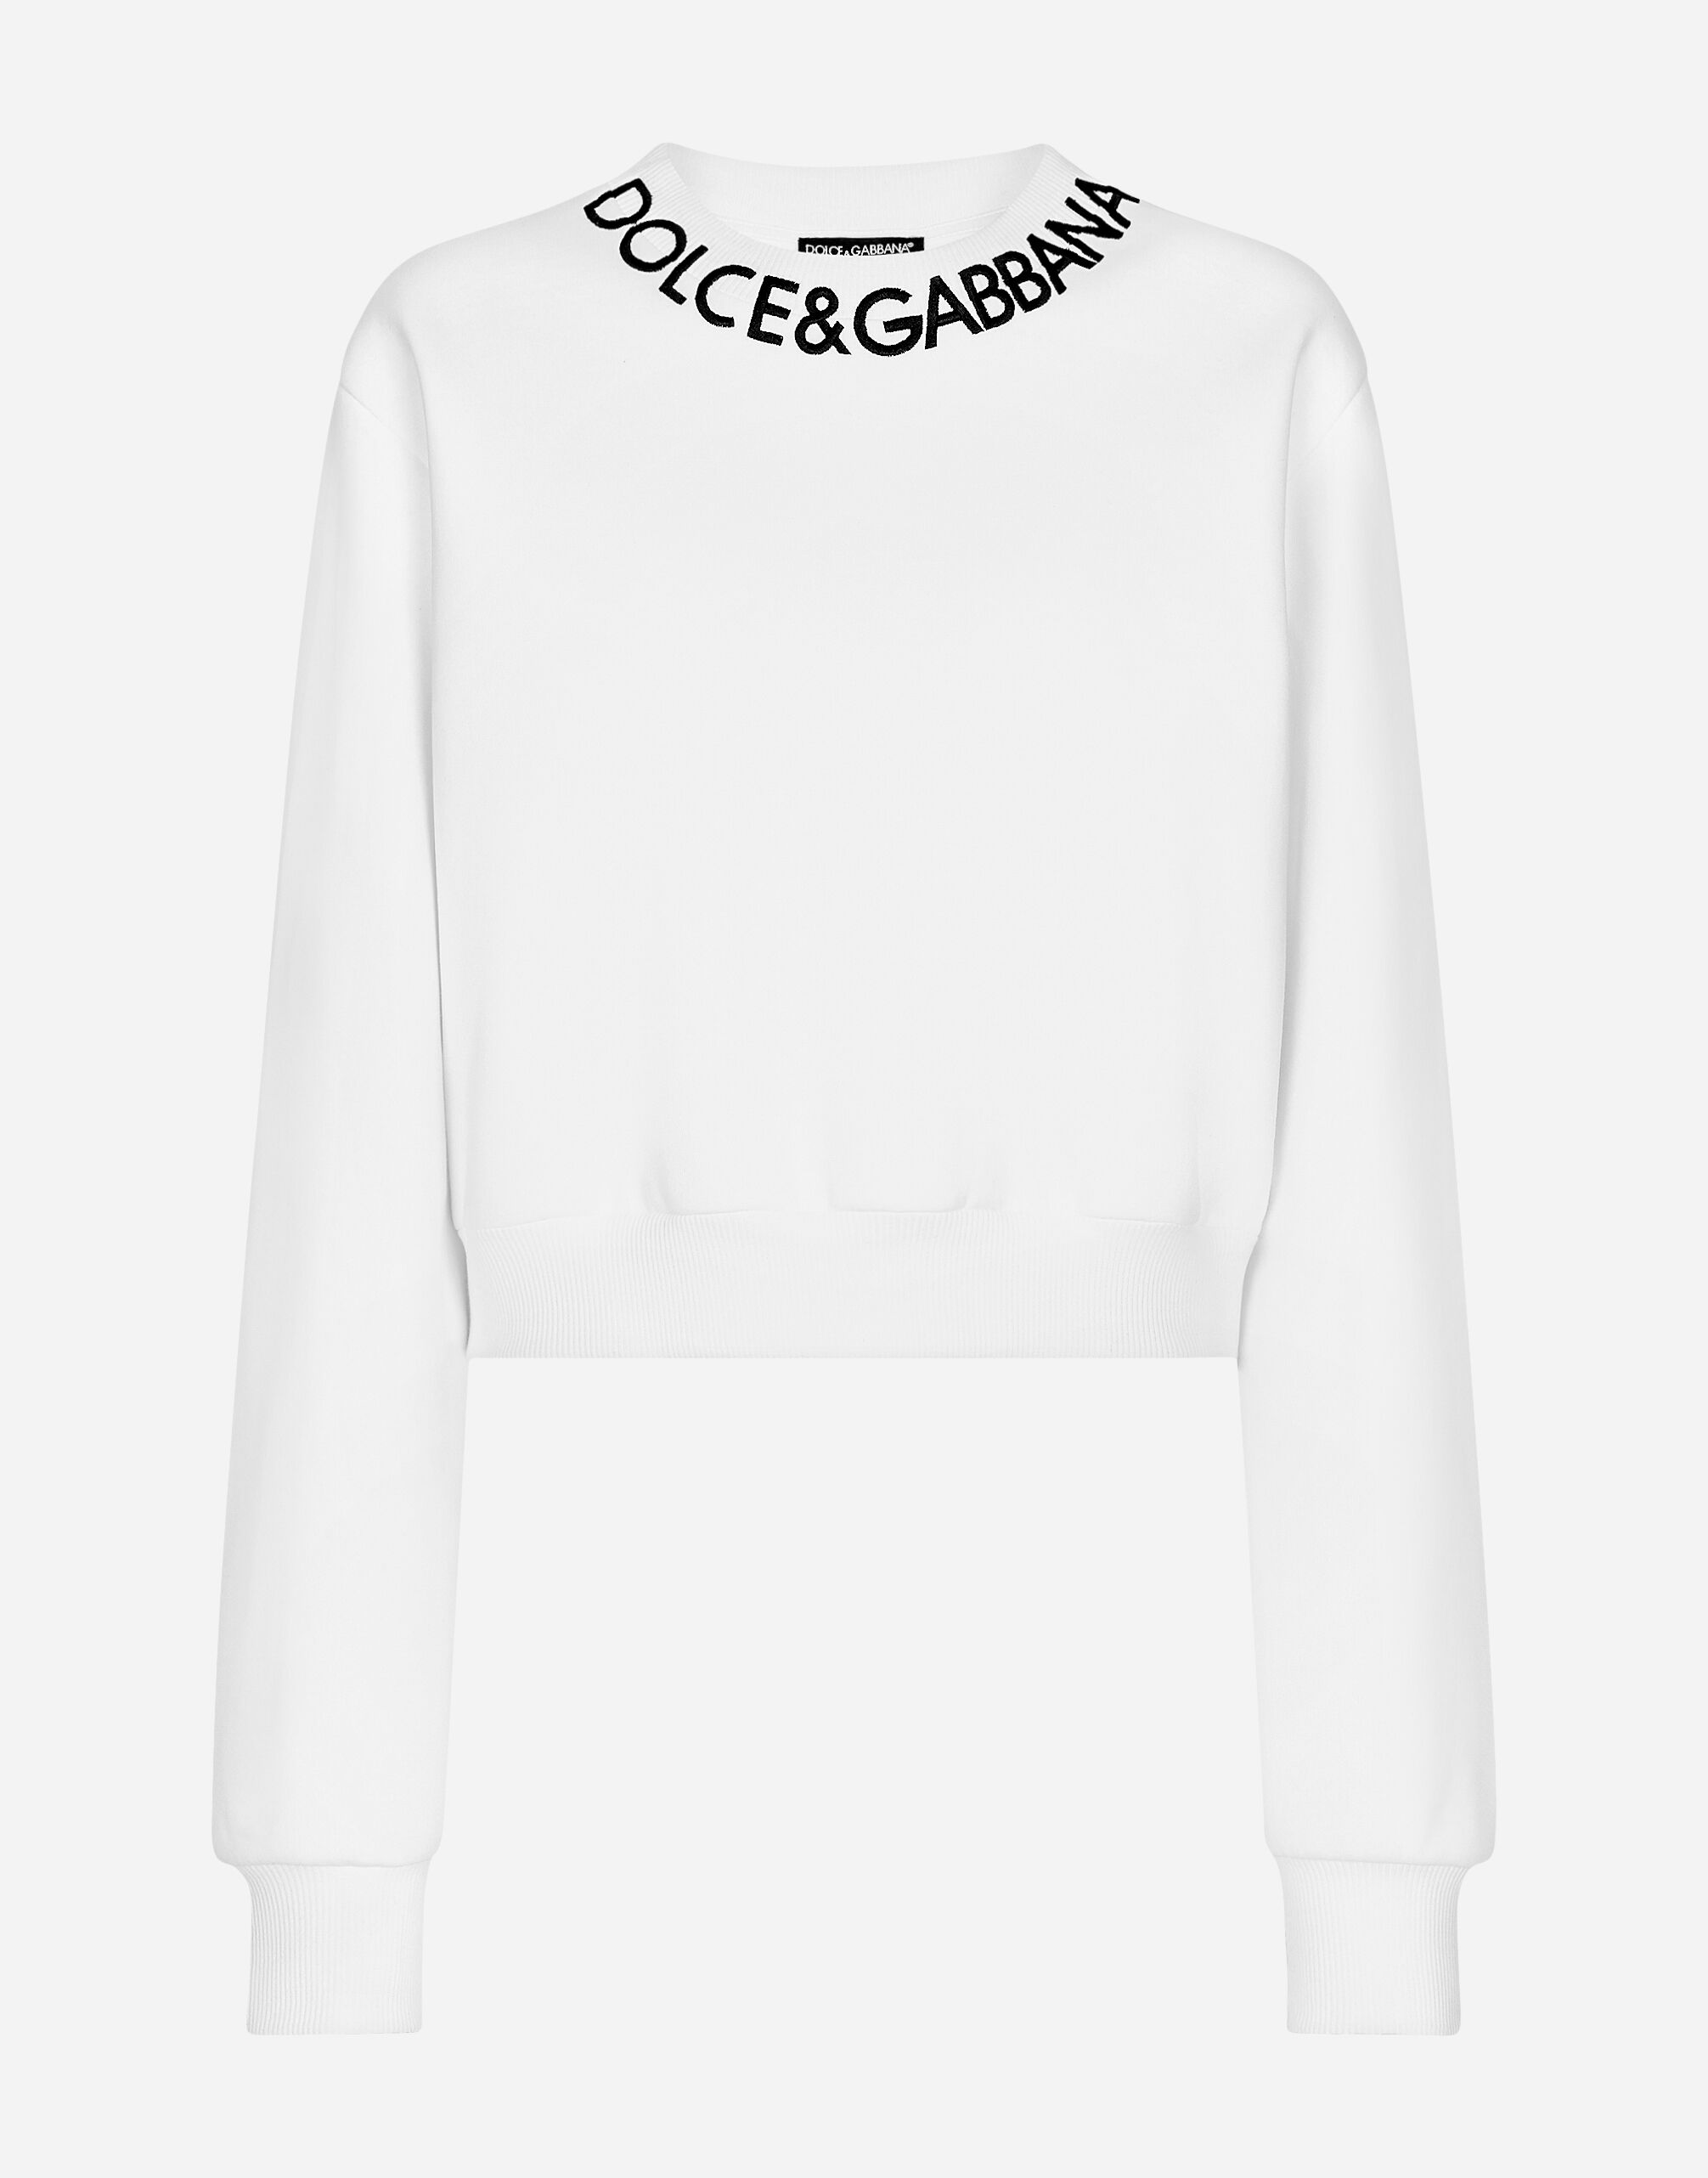 Dolce & Gabbana Cropped jersey sweatshirt with logo embroidery on neck Blue G8KK1TFU7EN